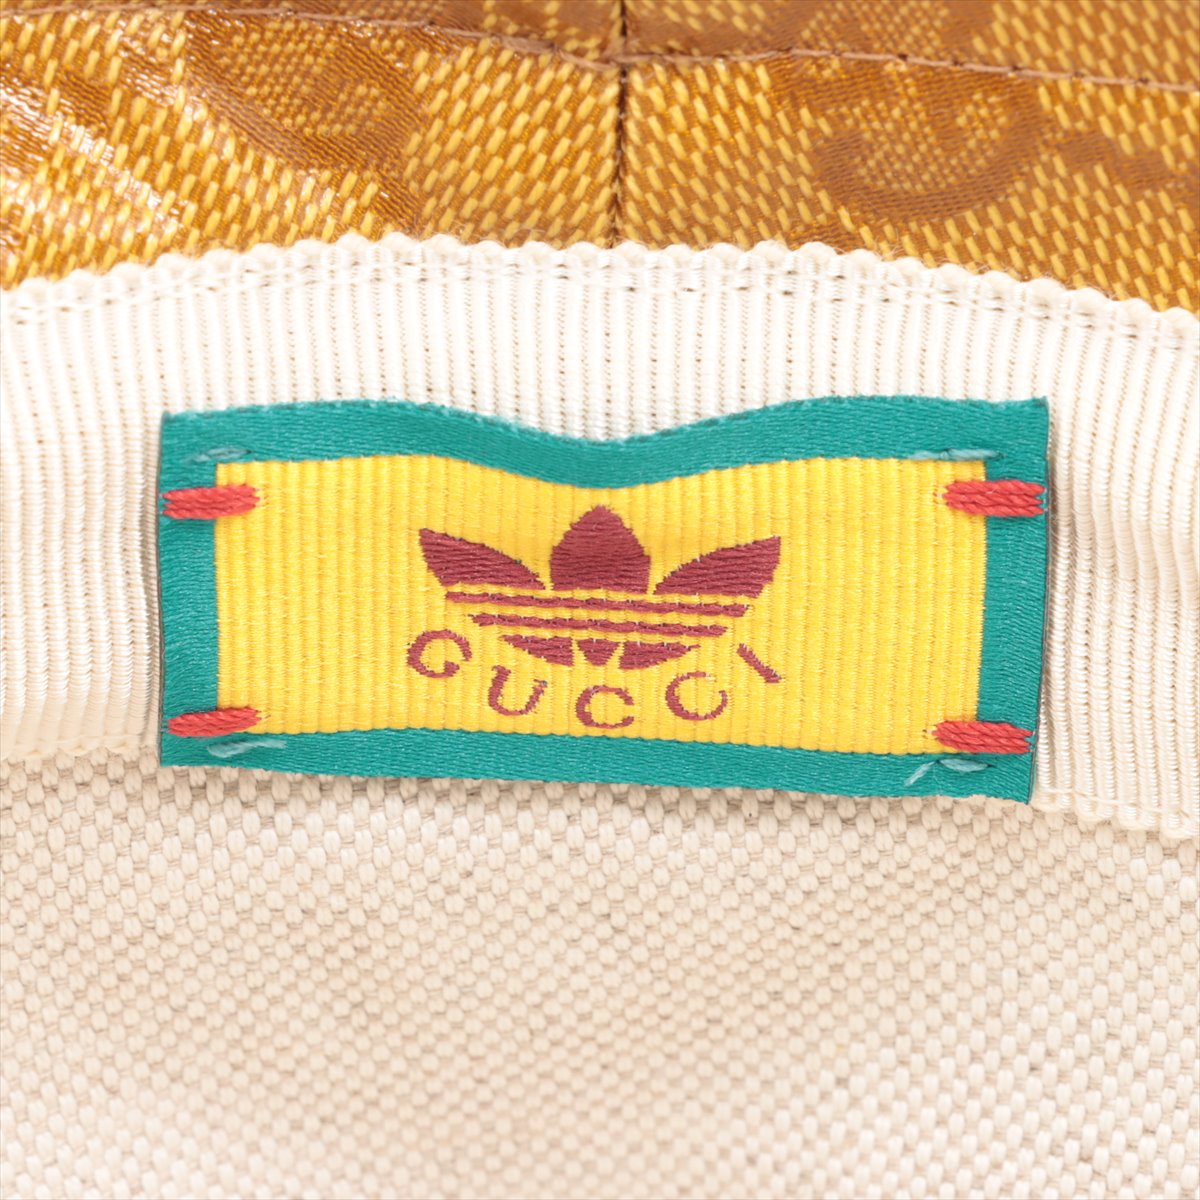 Gucci x adidas GG Crystal Bucket Hat Cotton & nylon Brown 696484